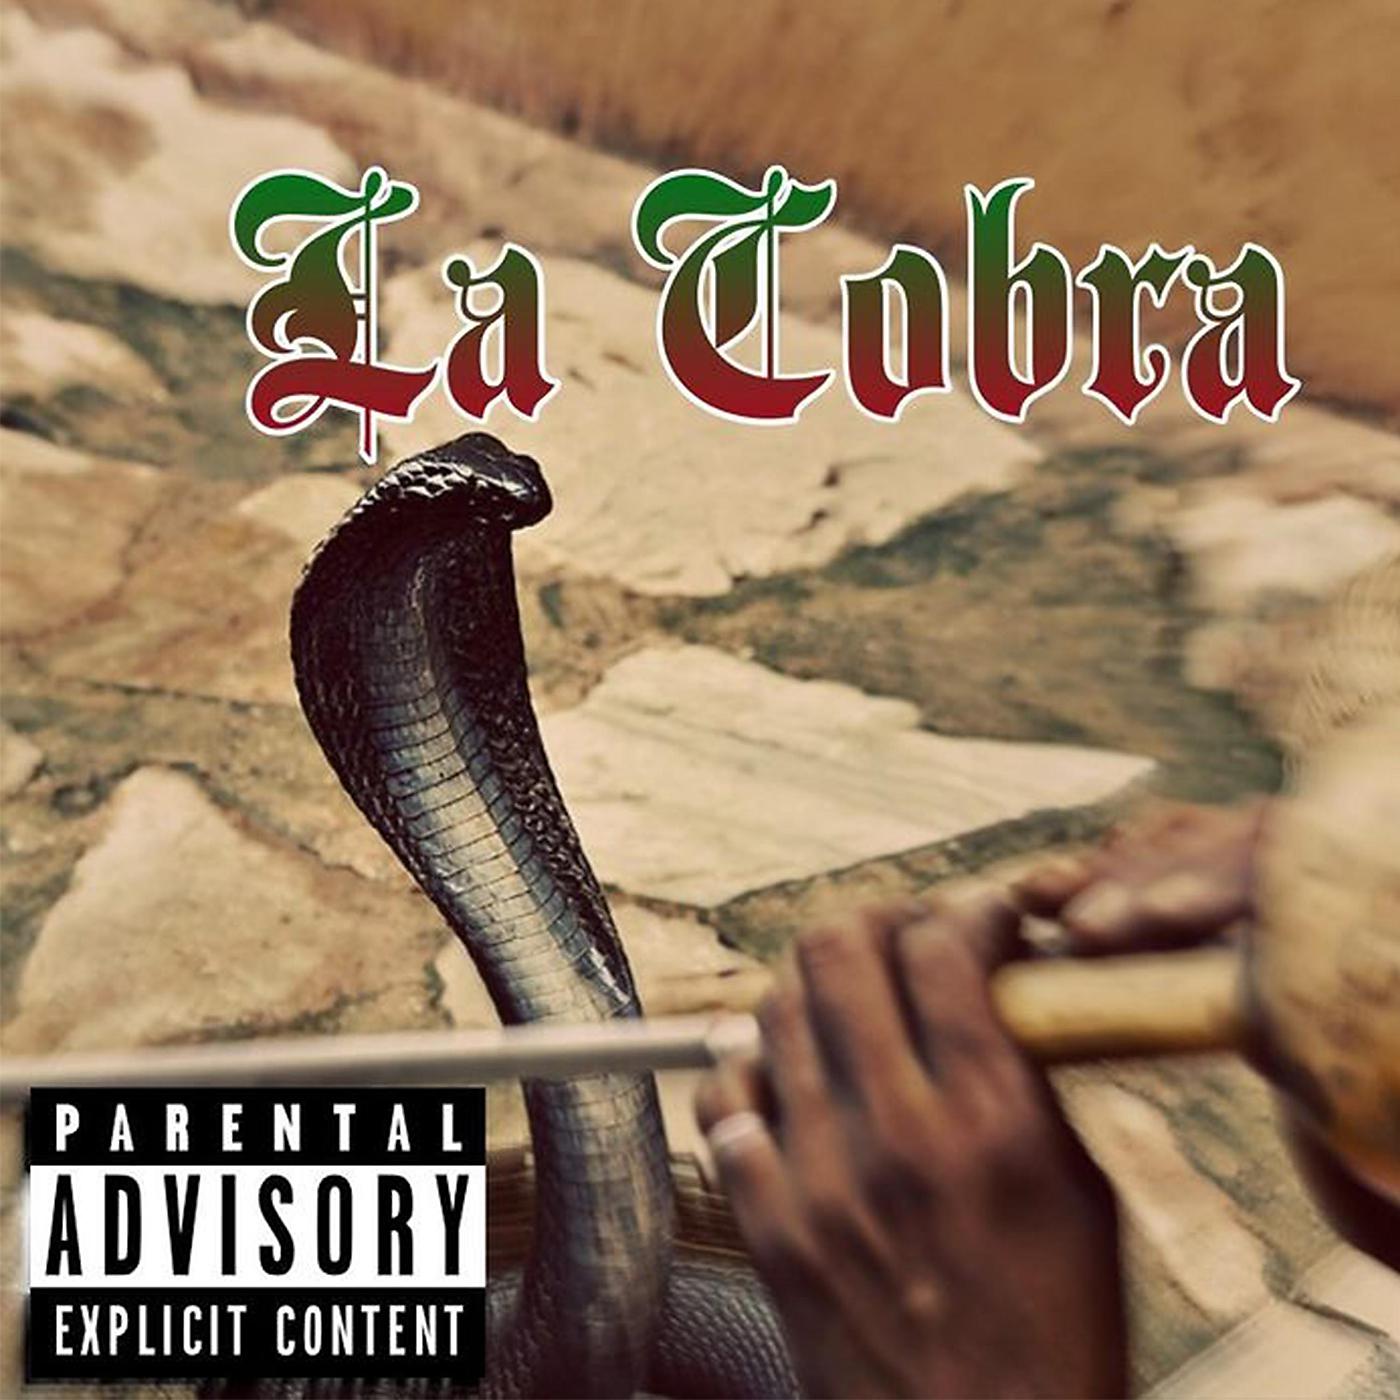 Постер альбома La Cobra